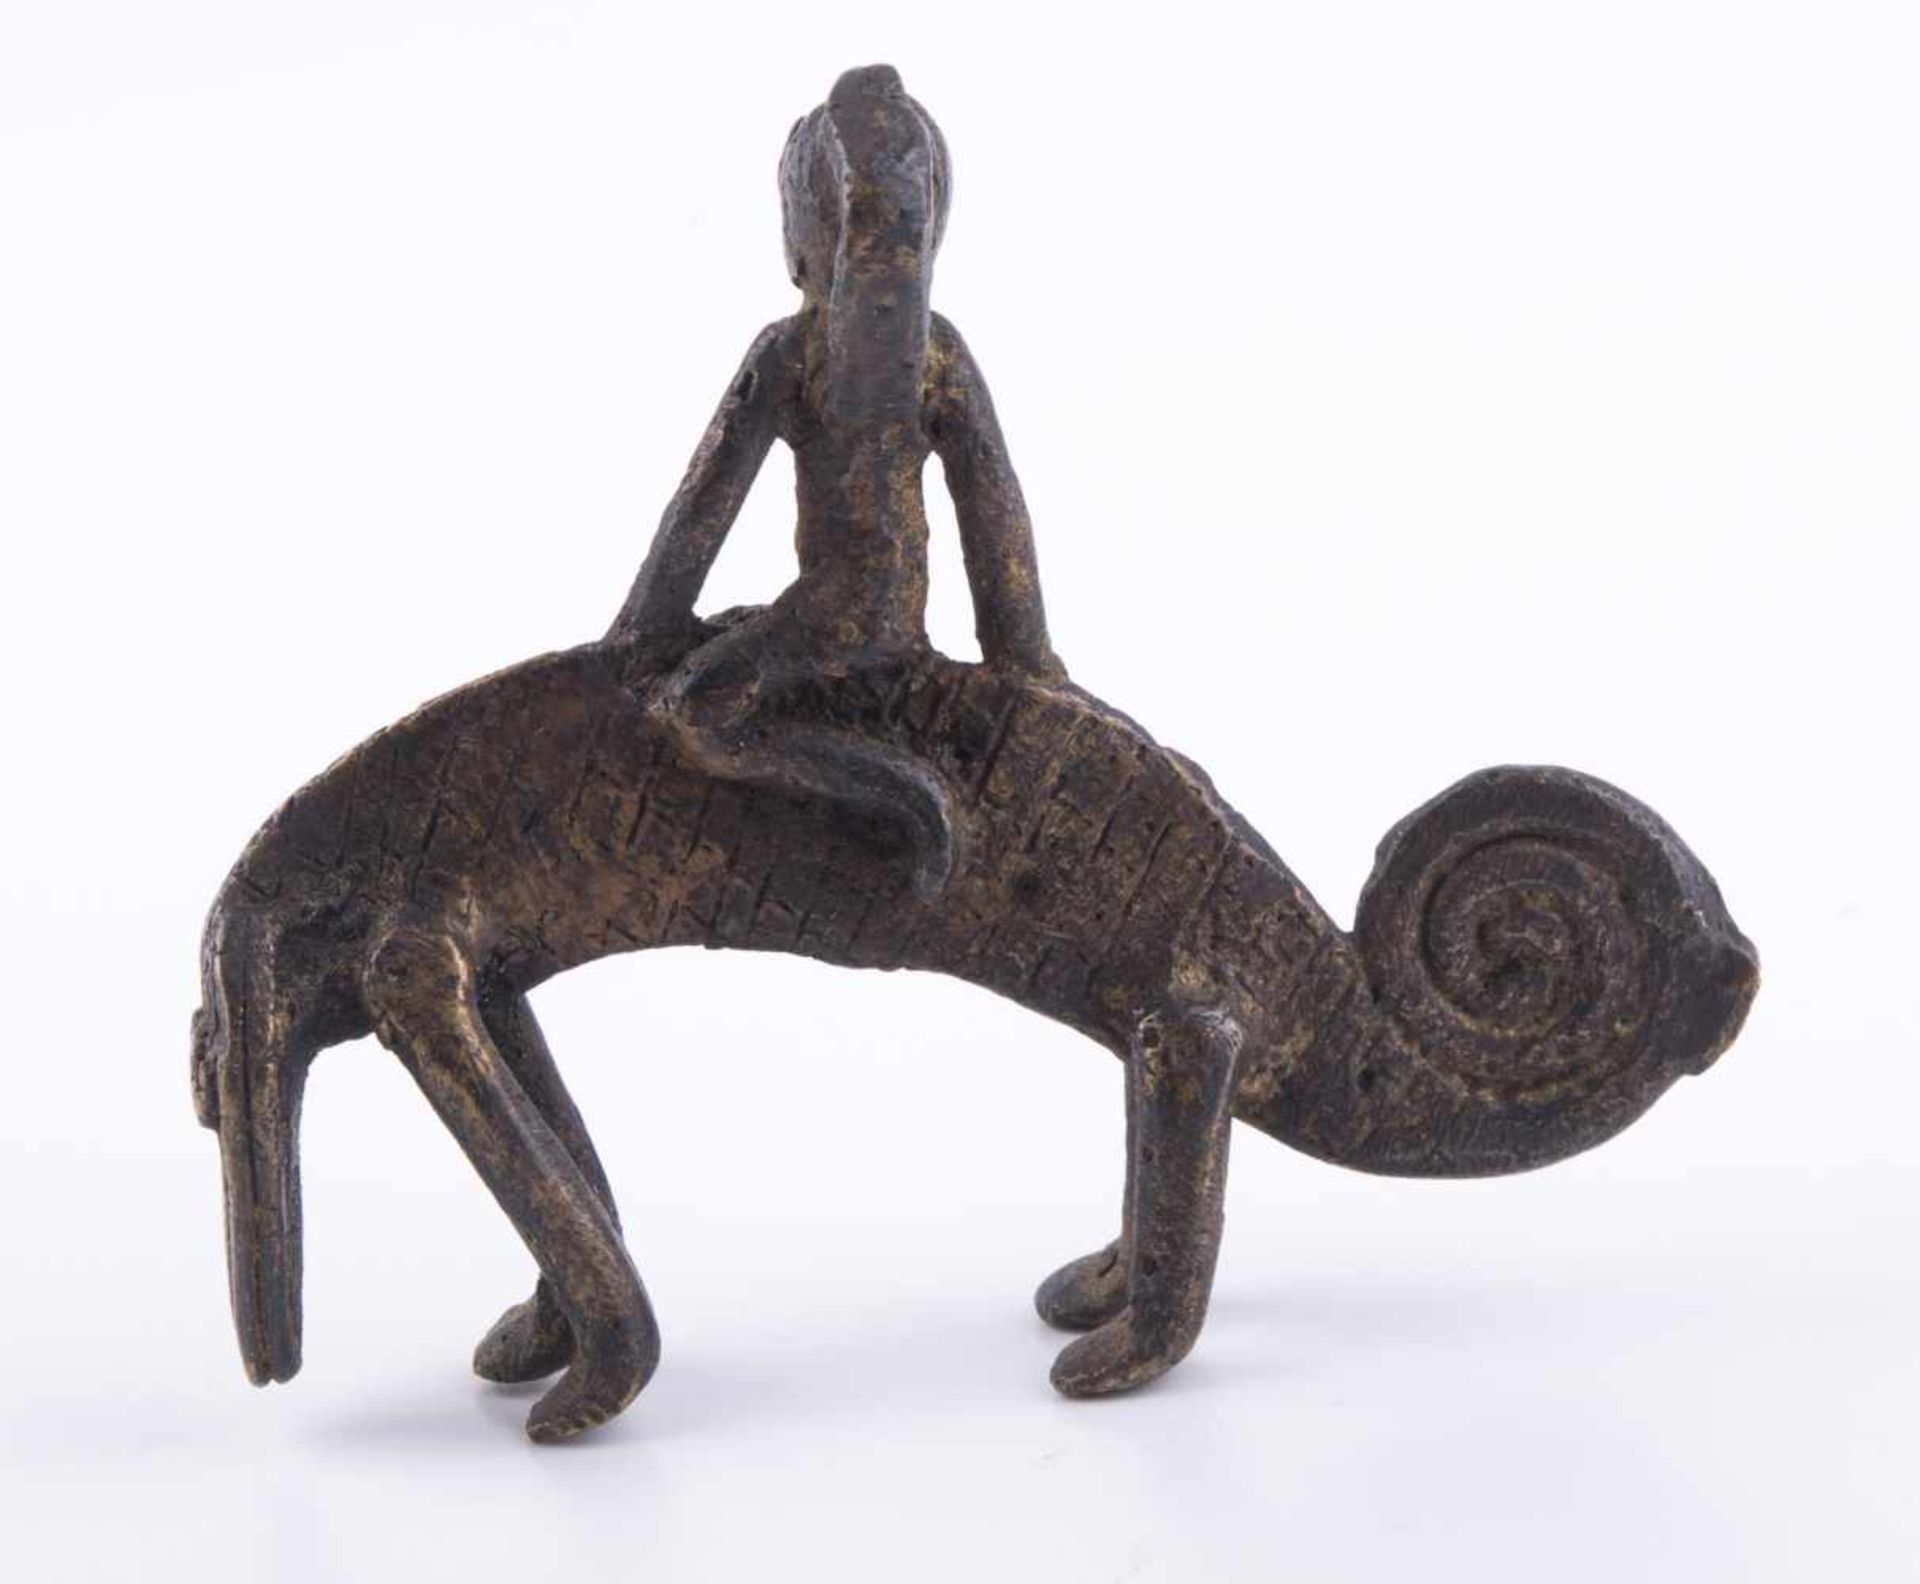 Ashanti Figur Afrika um 1900 / Ashanti figure, Africa about 1900 Goldgewicht, Bronze, 62 mm x 72 mm, - Bild 2 aus 3